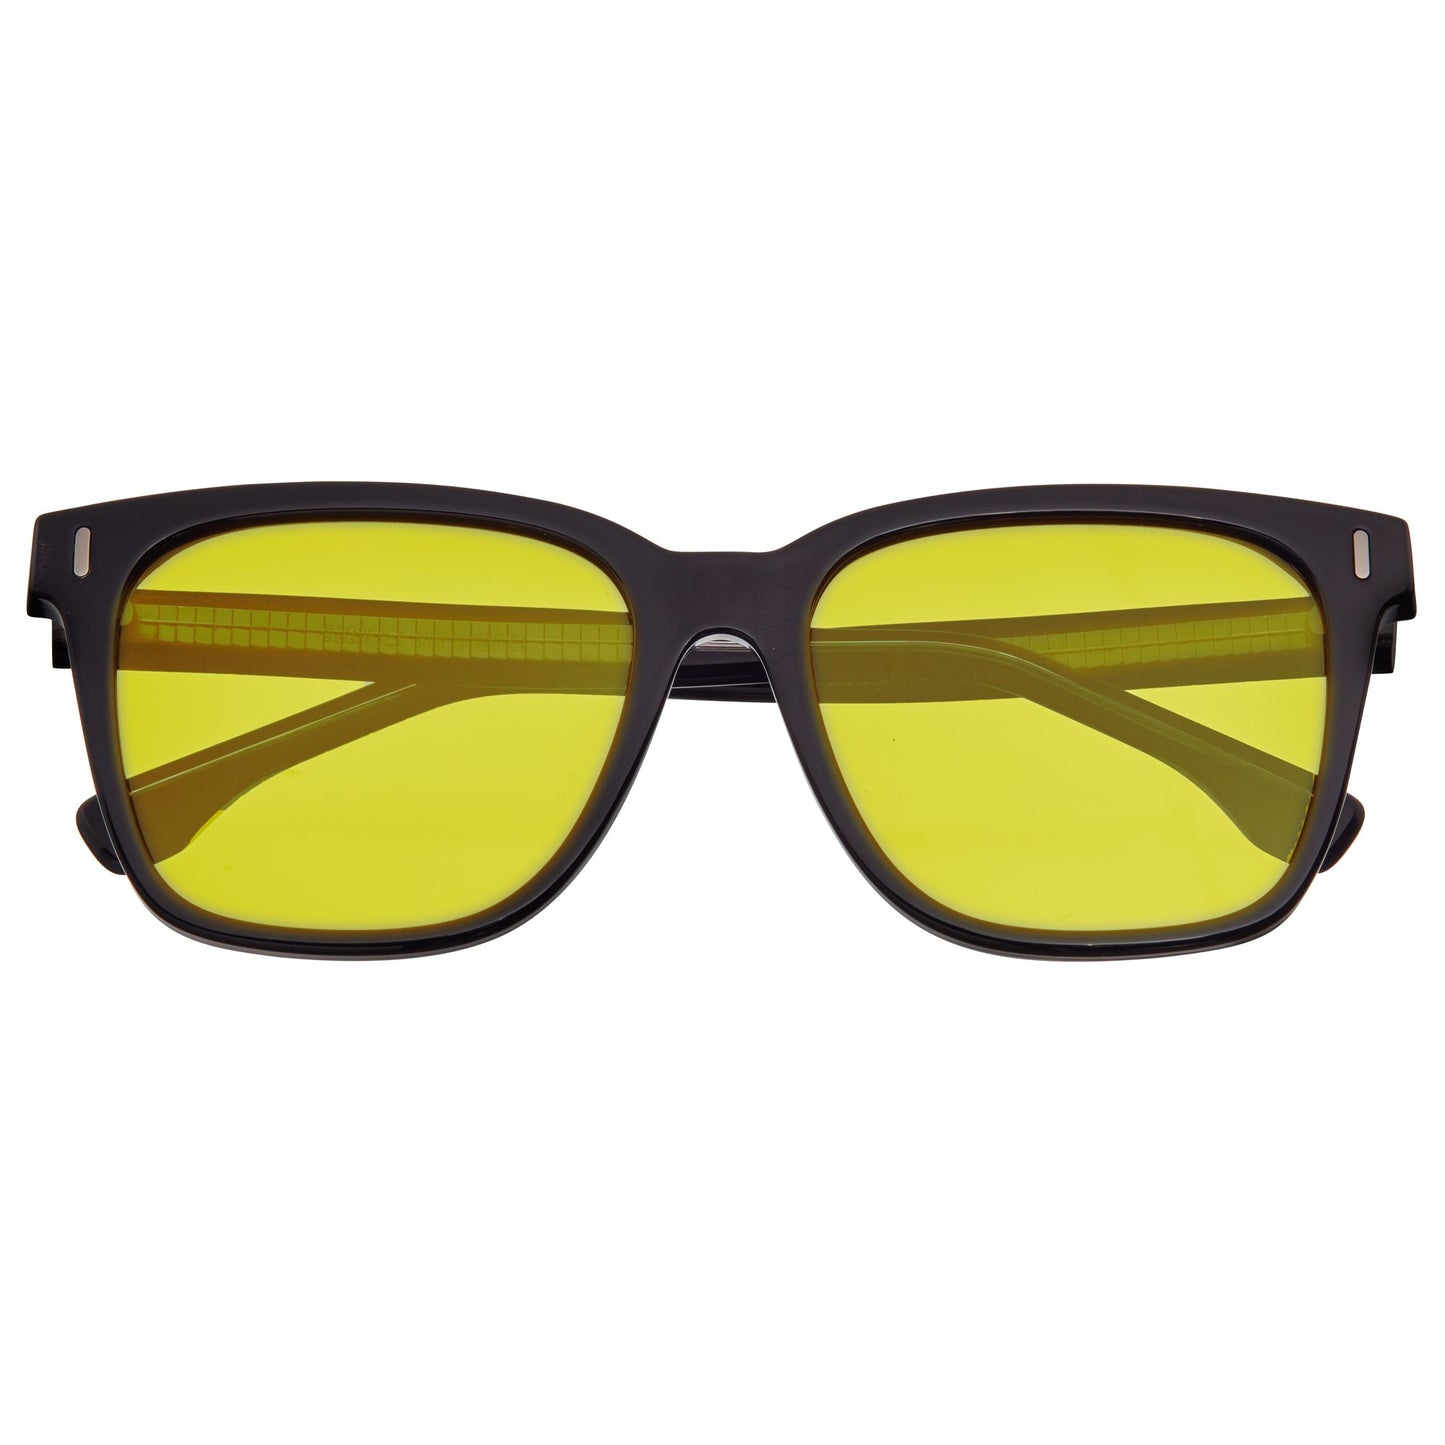 Breed Linux Polarized Sunglasses - Black/Yellow - BSG066C8